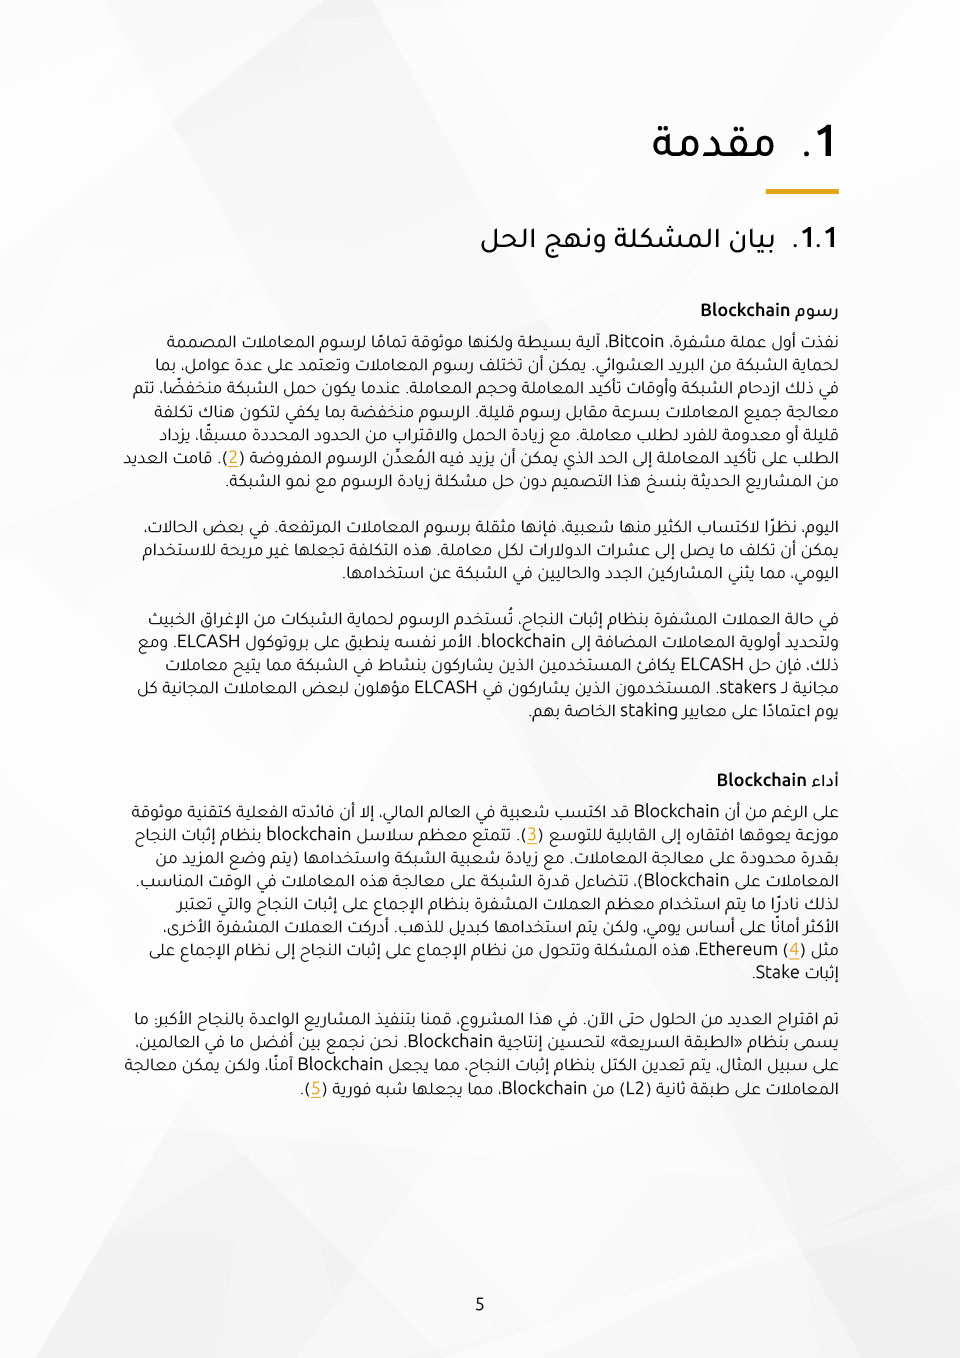 Strona dokumentu po arabsku